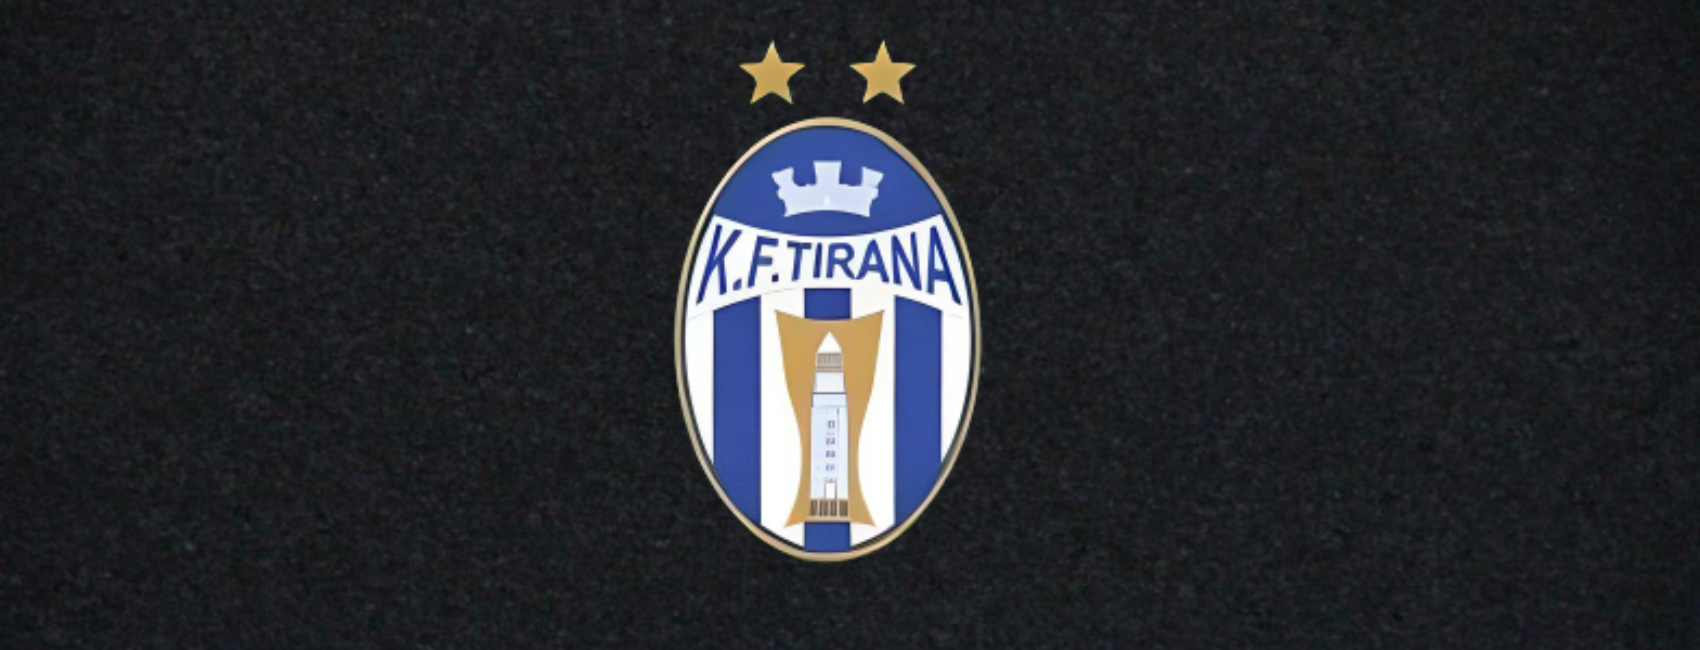 KF Tirana - KF Tirana added a new photo.